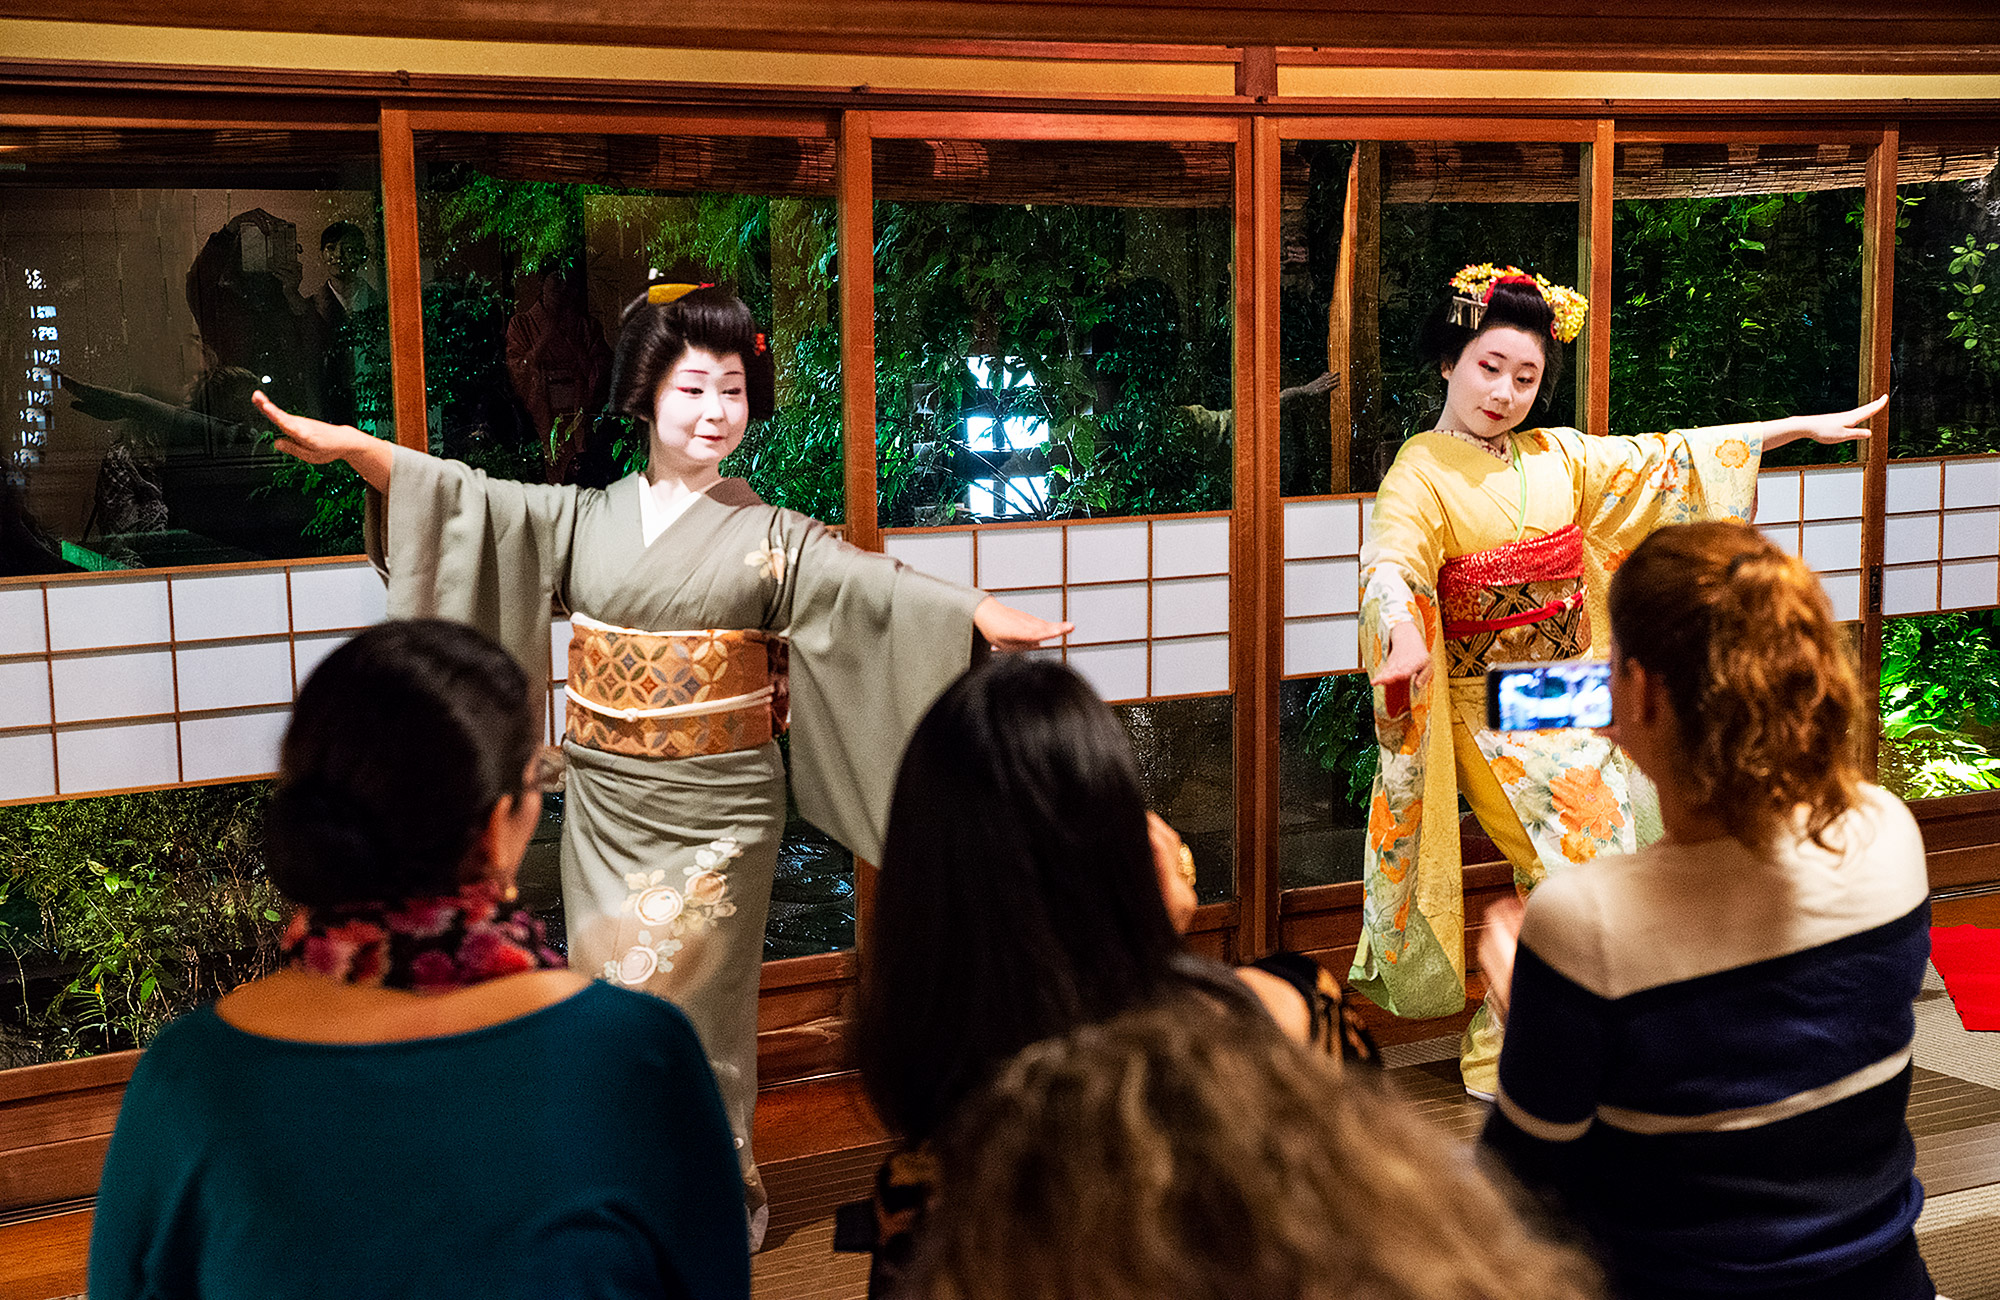 Kawabun Culture Night - Geisha and Maiko performance